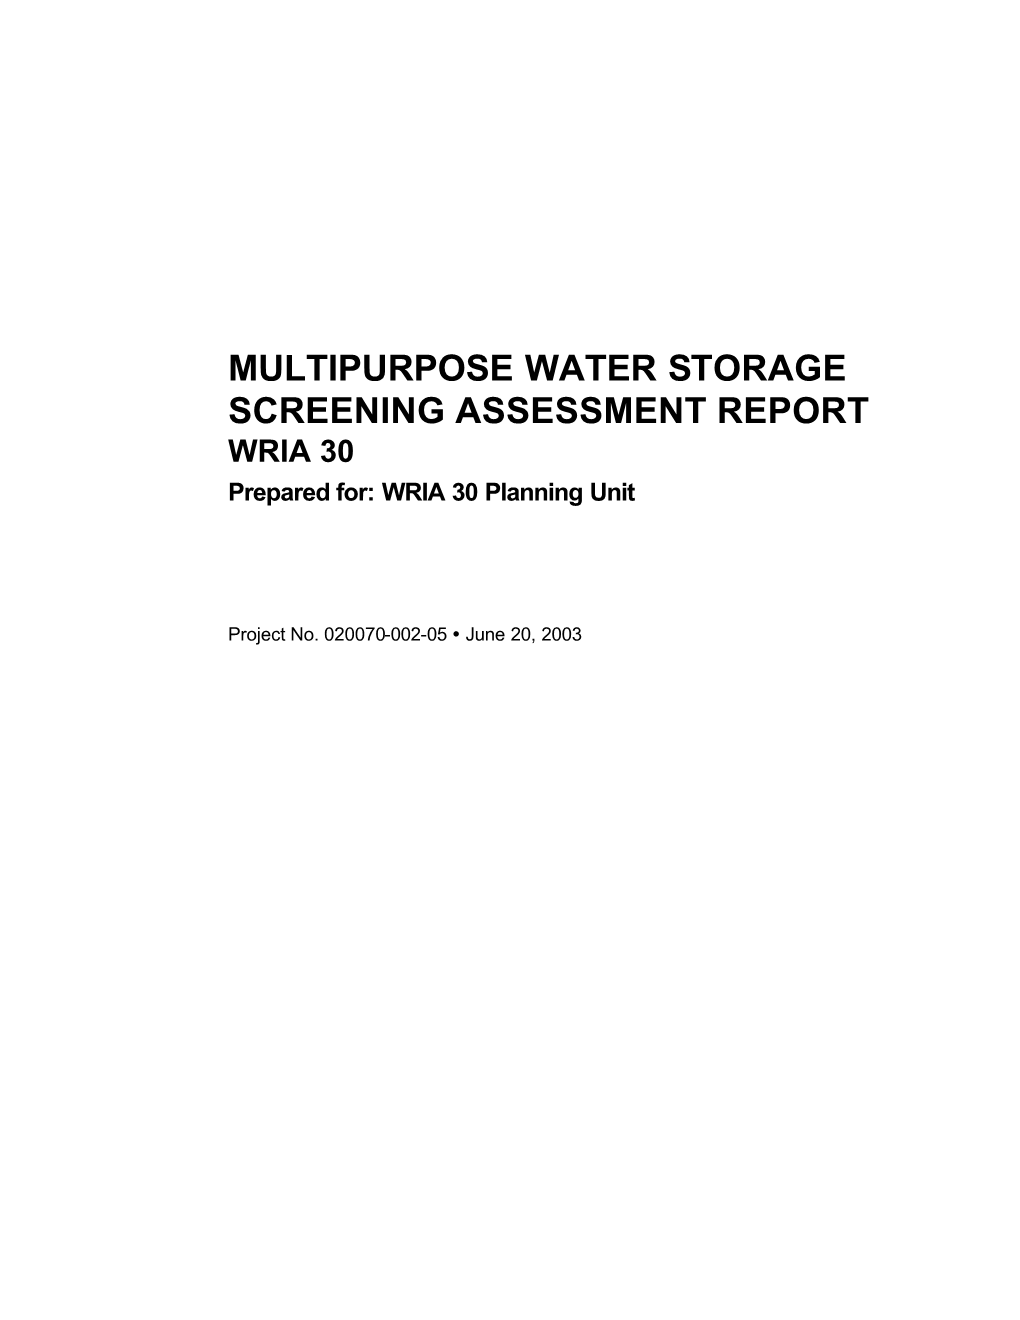 MULTIPURPOSE WATER STORAGE SCREENING ASSESSMENT REPORT WRIA 30 Prepared For: WRIA 30 Planning Unit